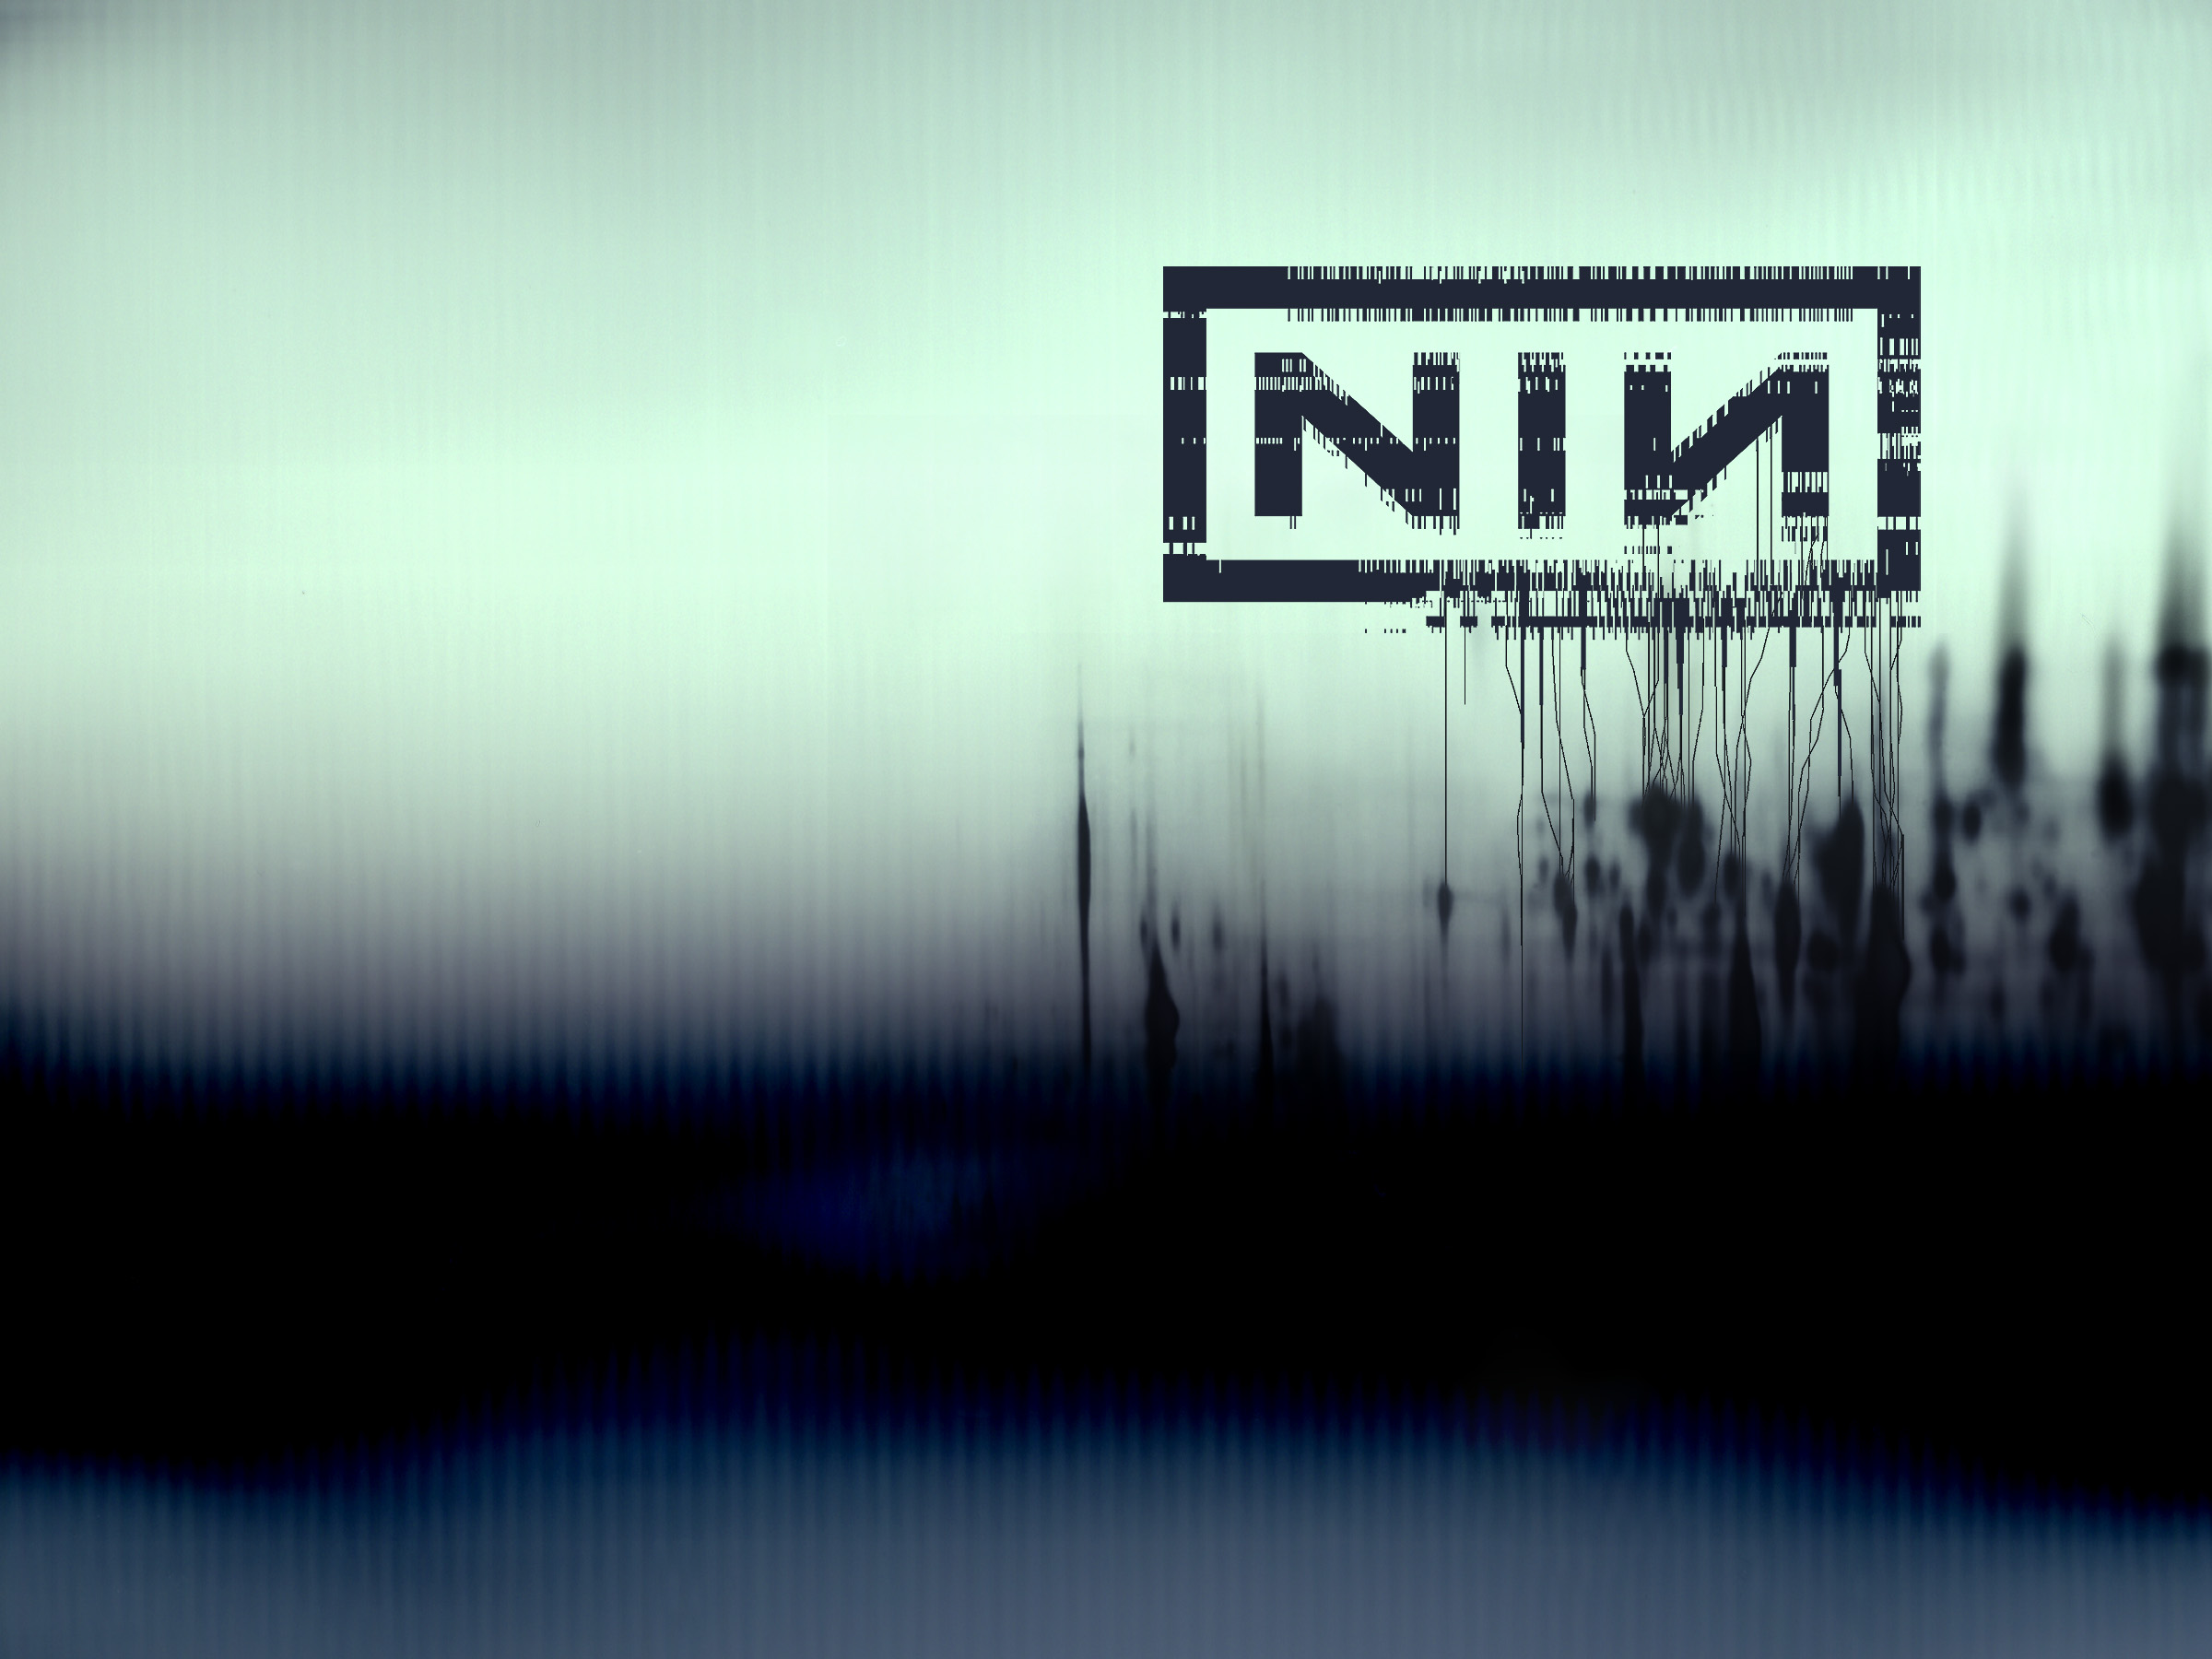 Nine Inch Nails, призраки - обои на рабочий стол